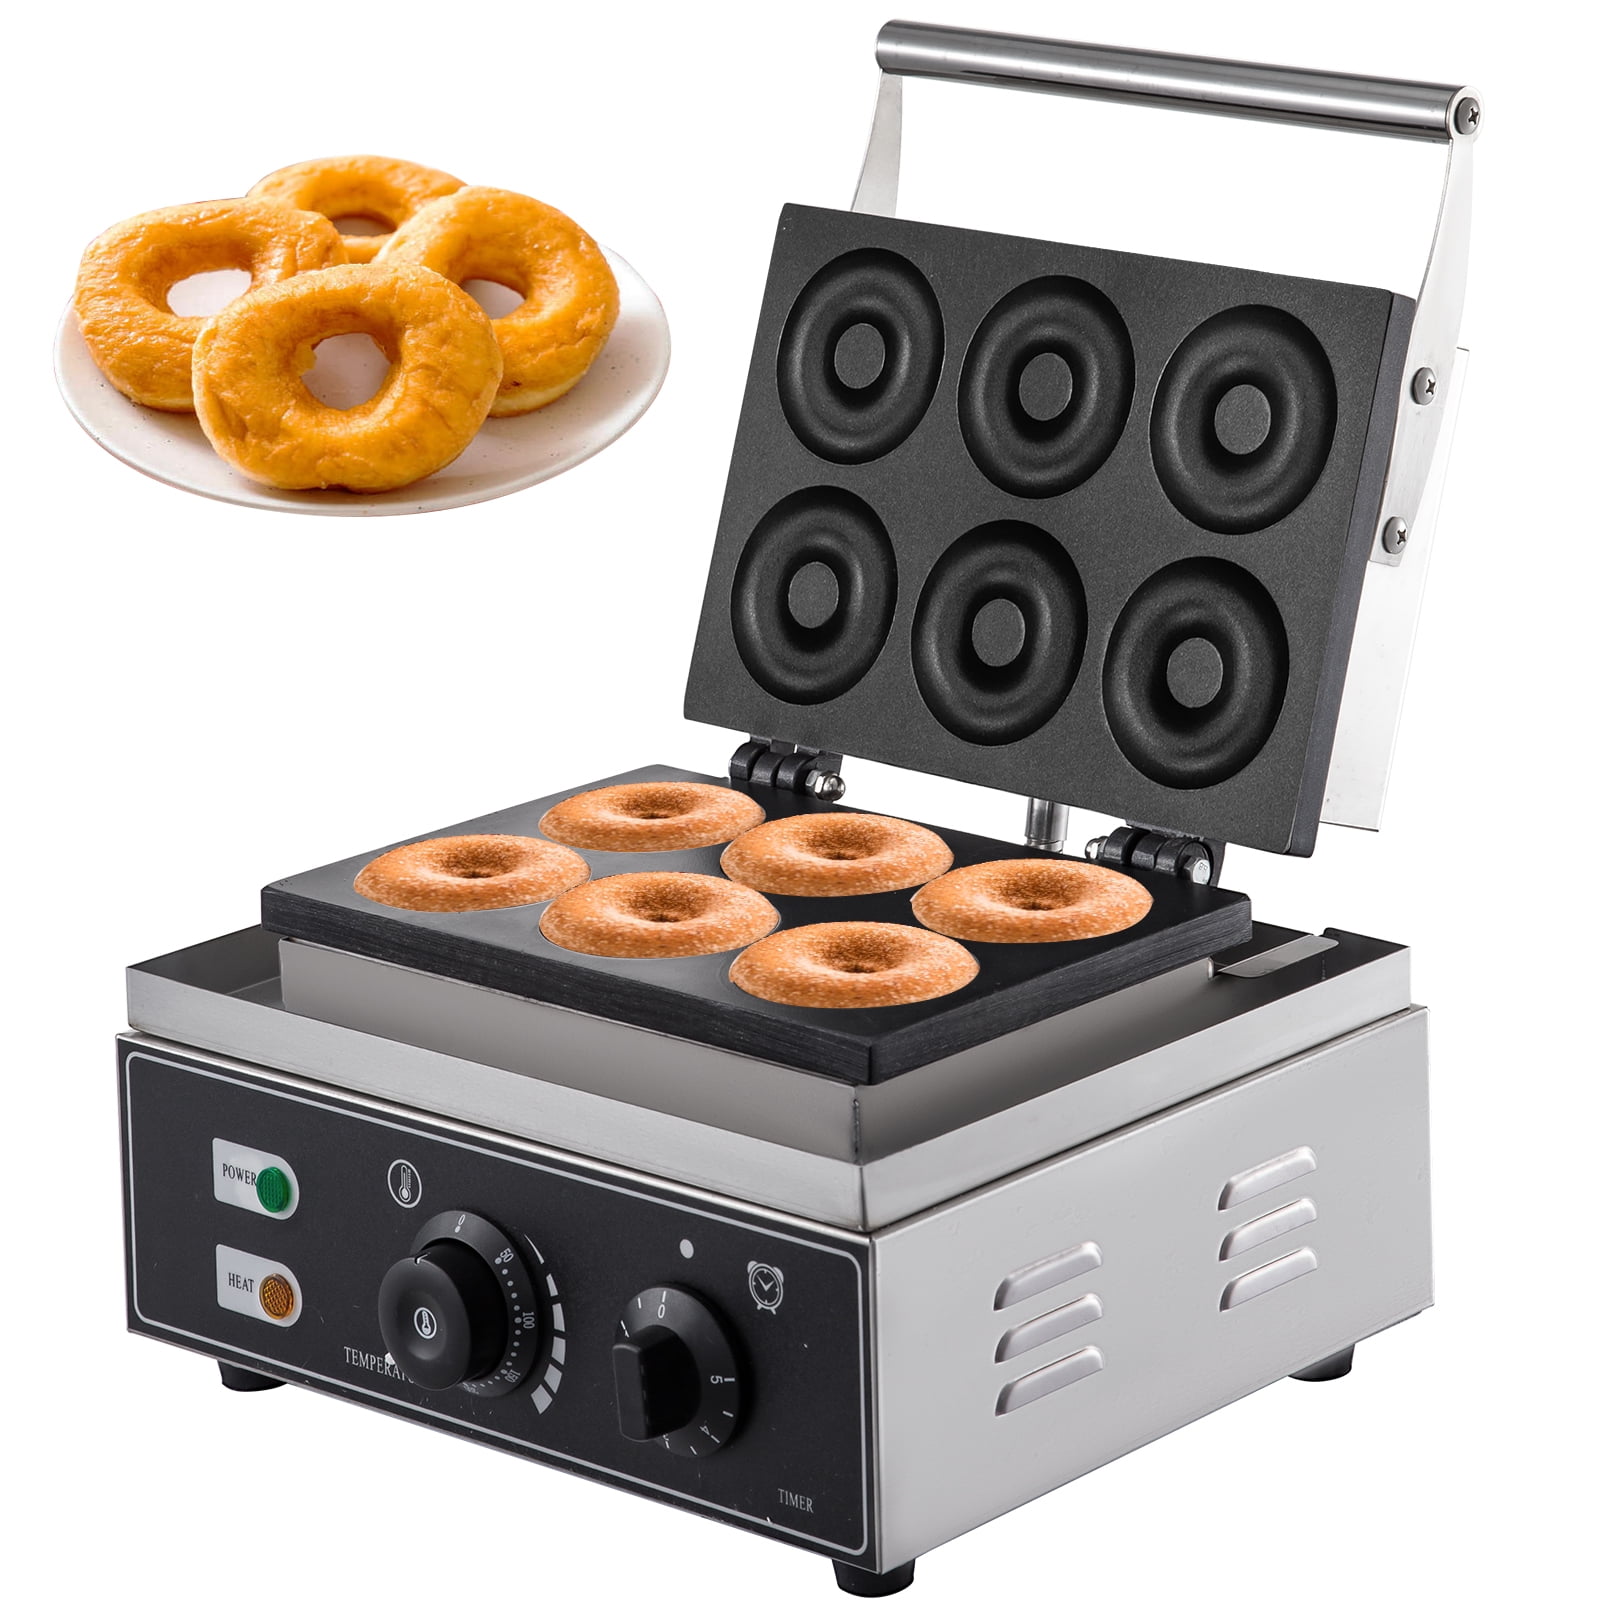 Dash® Express Mini Donut Maker at Von Maur